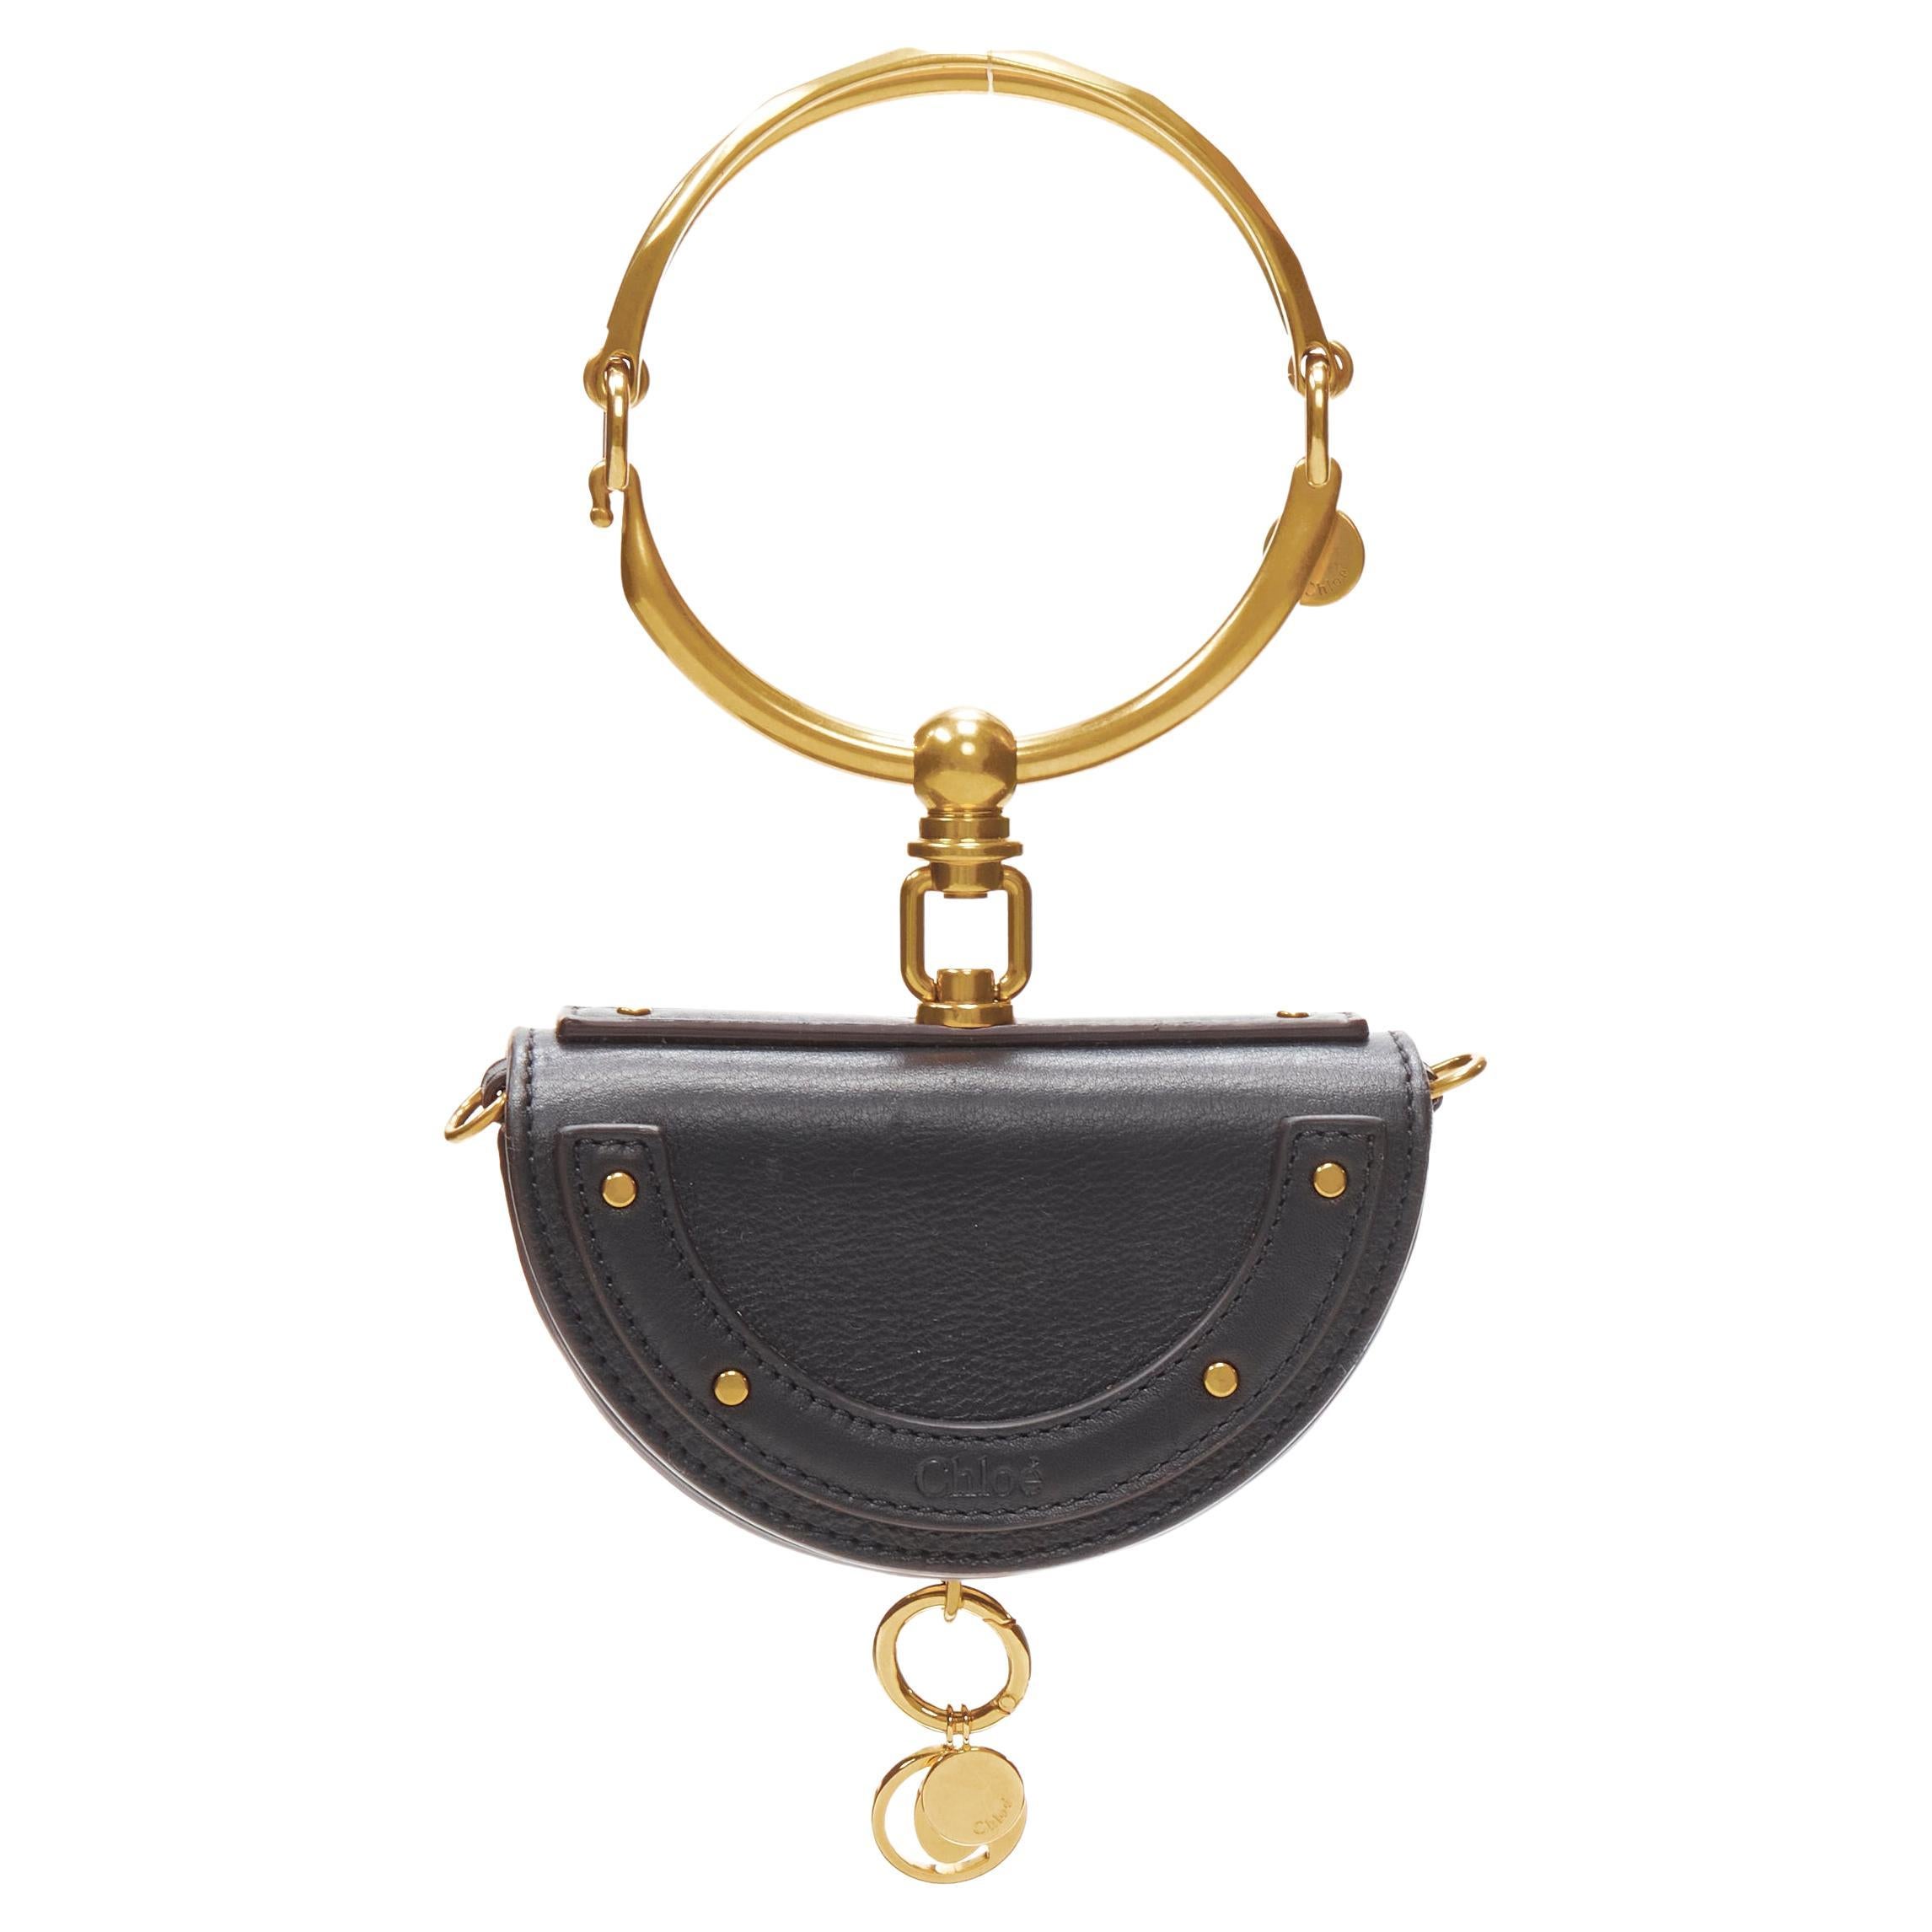 CHLOE Small Nile gold bangle handle C charm black leather crossbody saddle bag